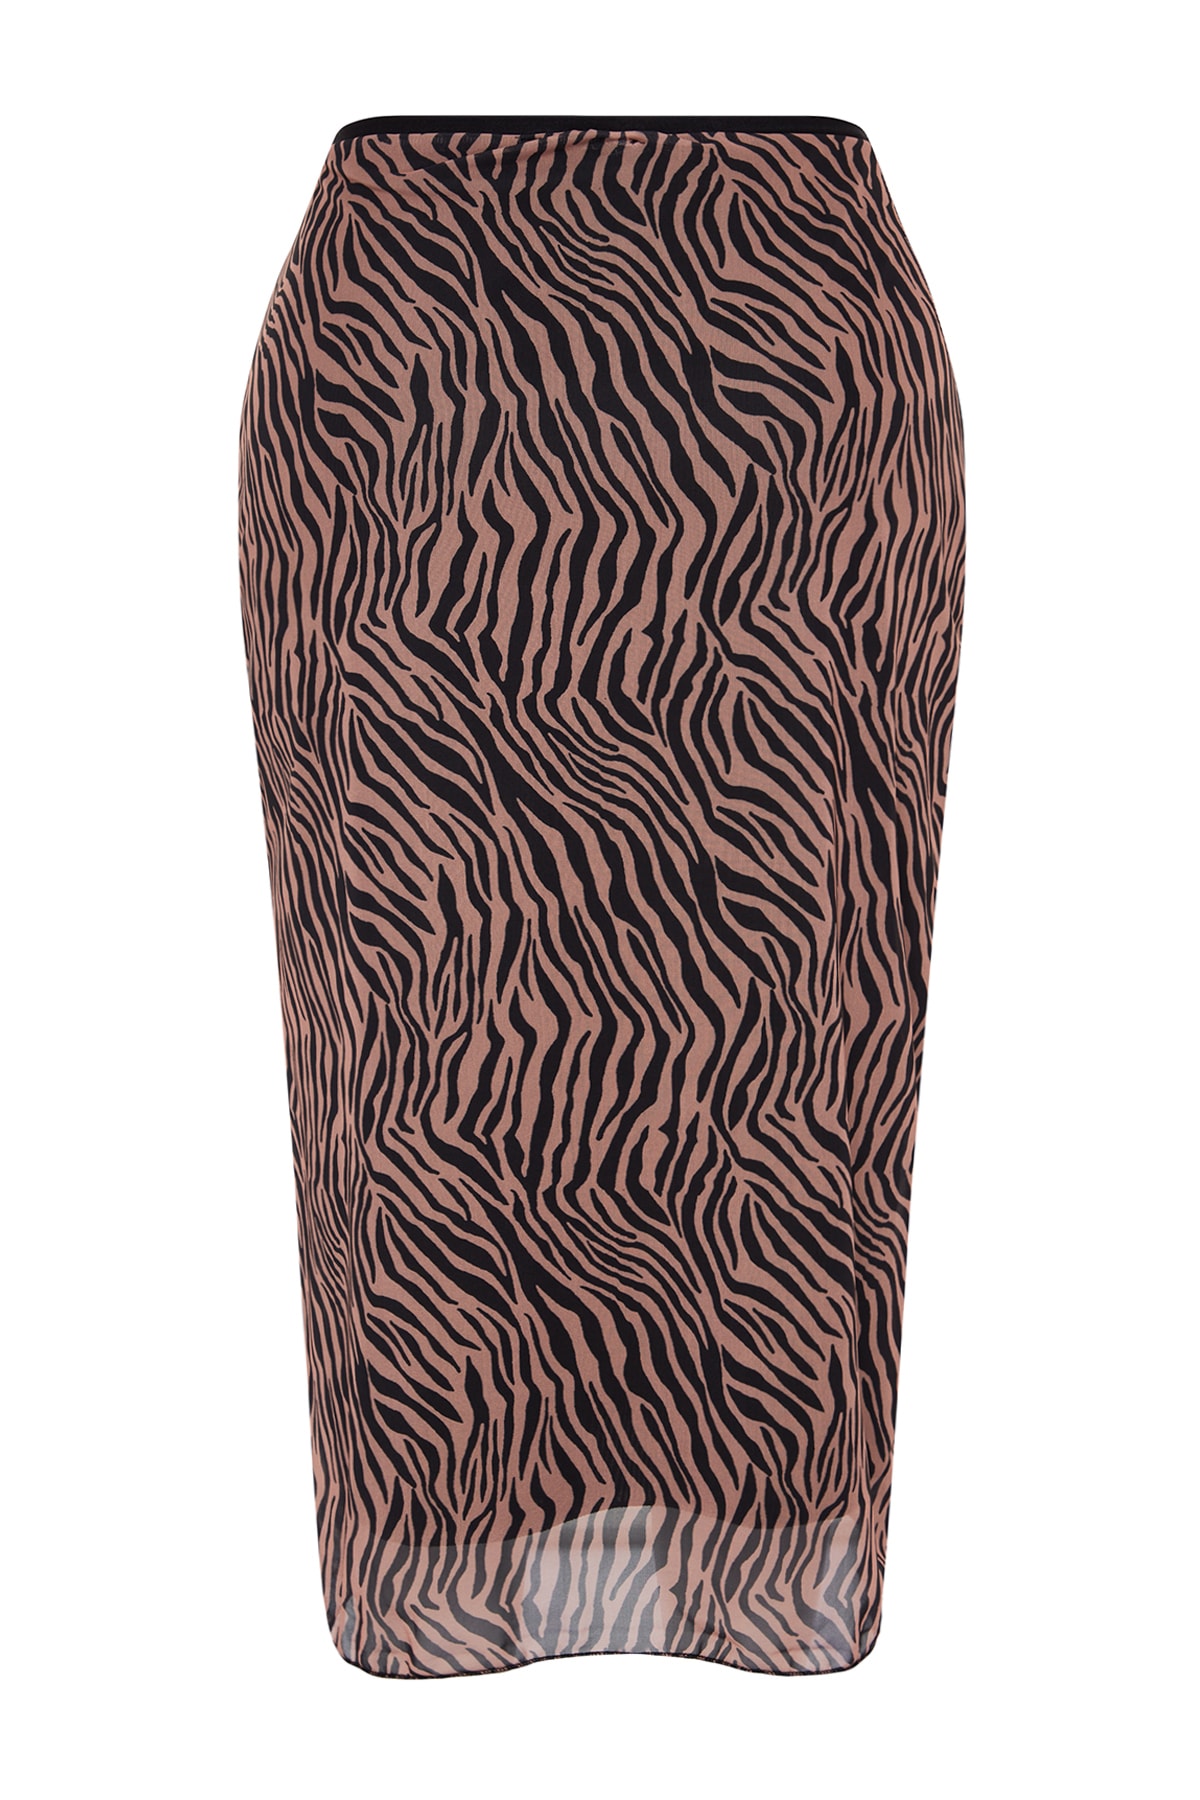 Trendyol Curve Black Animal Patterned Tulle Knitted Skirt